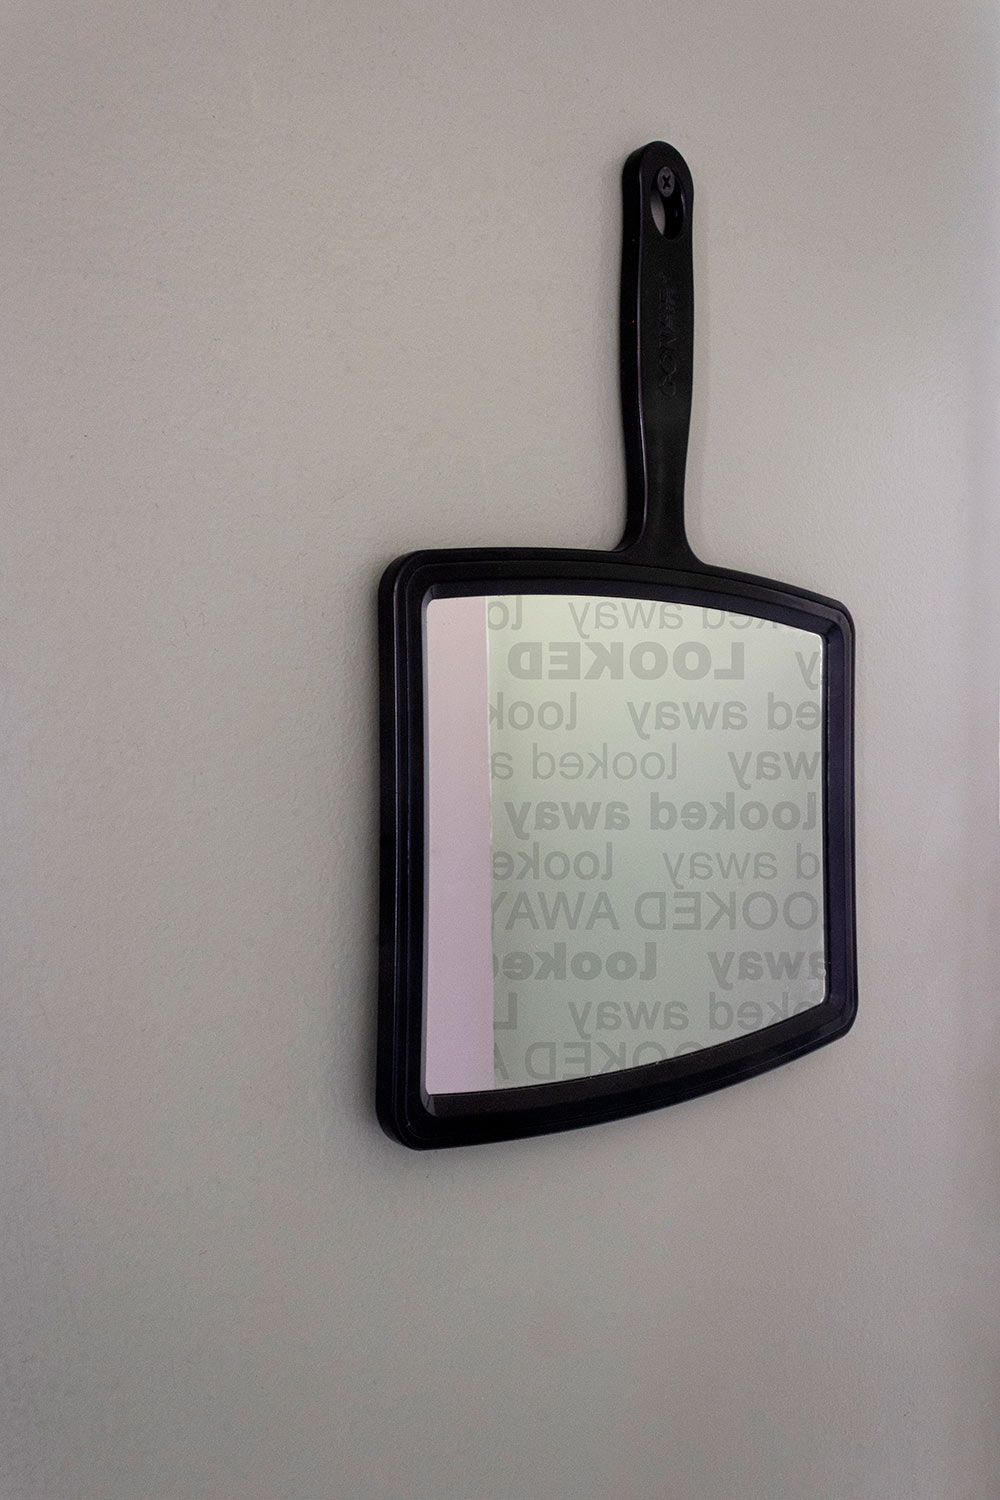 mirror hanging upside down on wall; "looked away" written on it